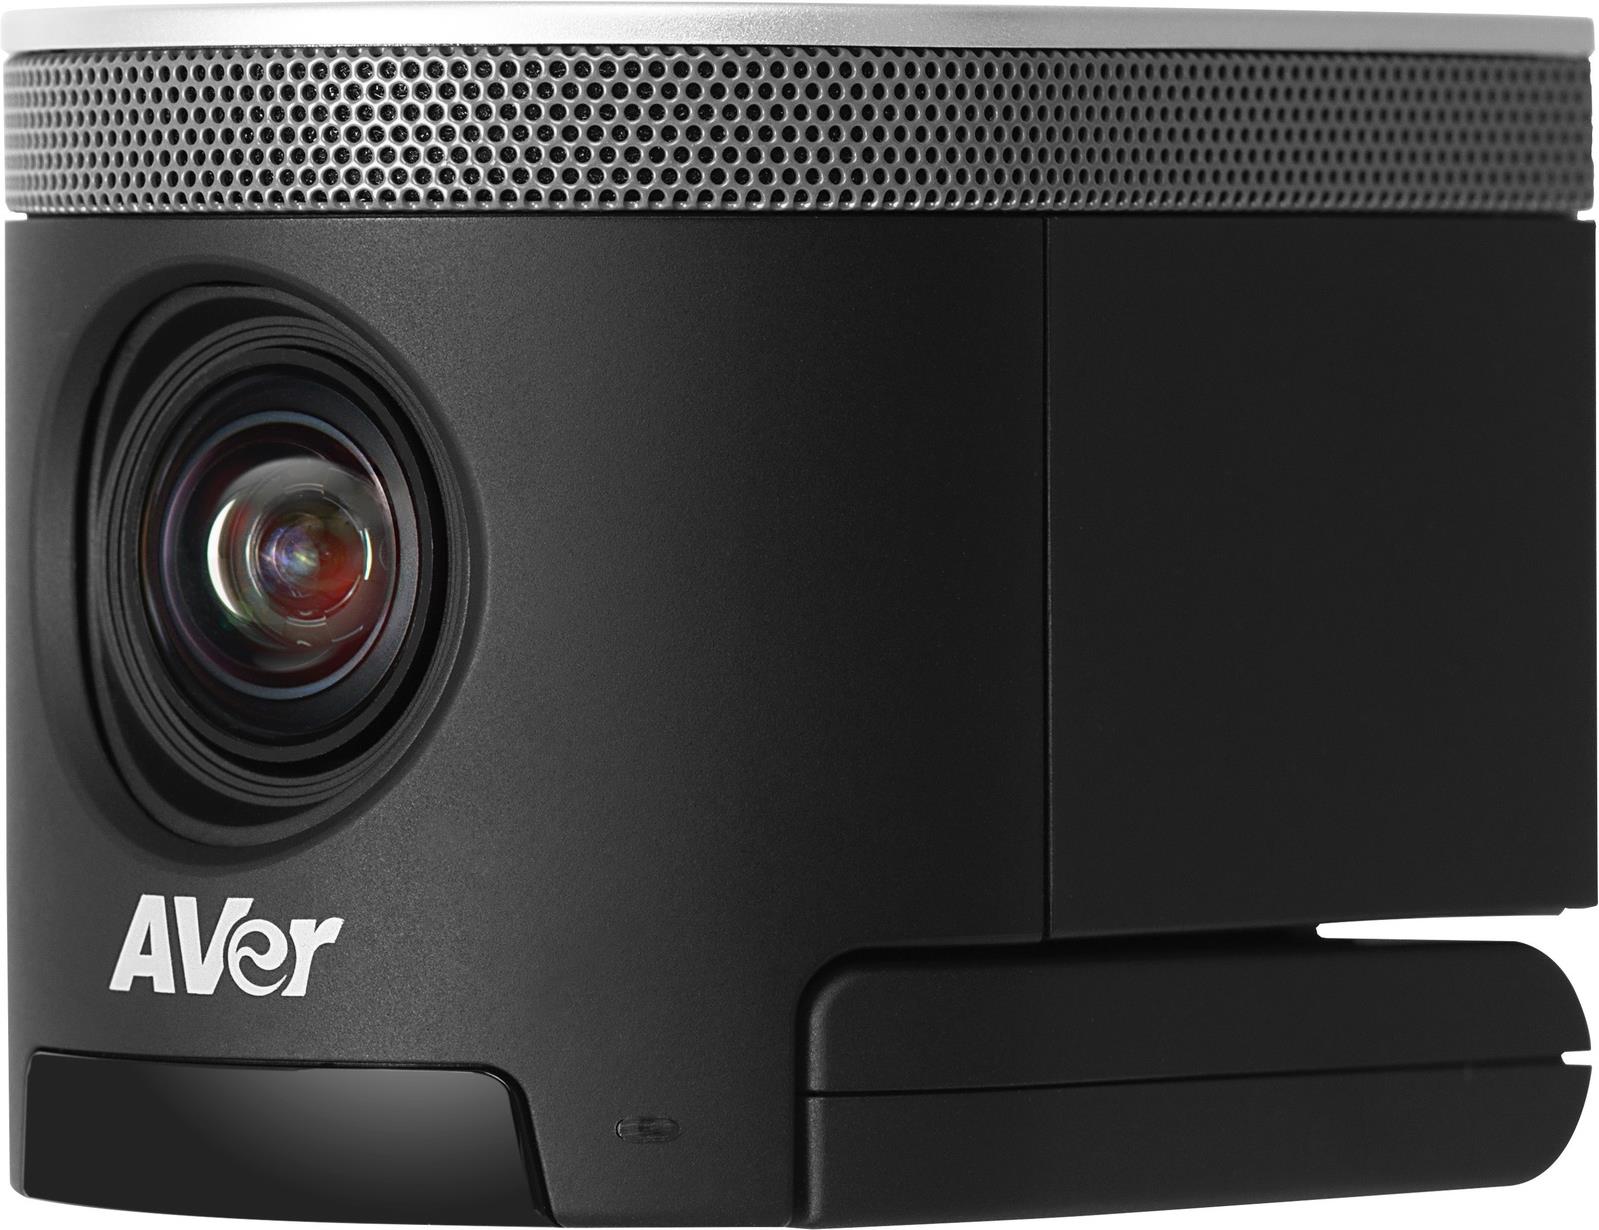 AVer CAM340+ - Konferenzkamera - Farbe - feste Irisblende - feste Brennweite - Audio - USB 3.1 - MJPEG, YUV von Avermedia